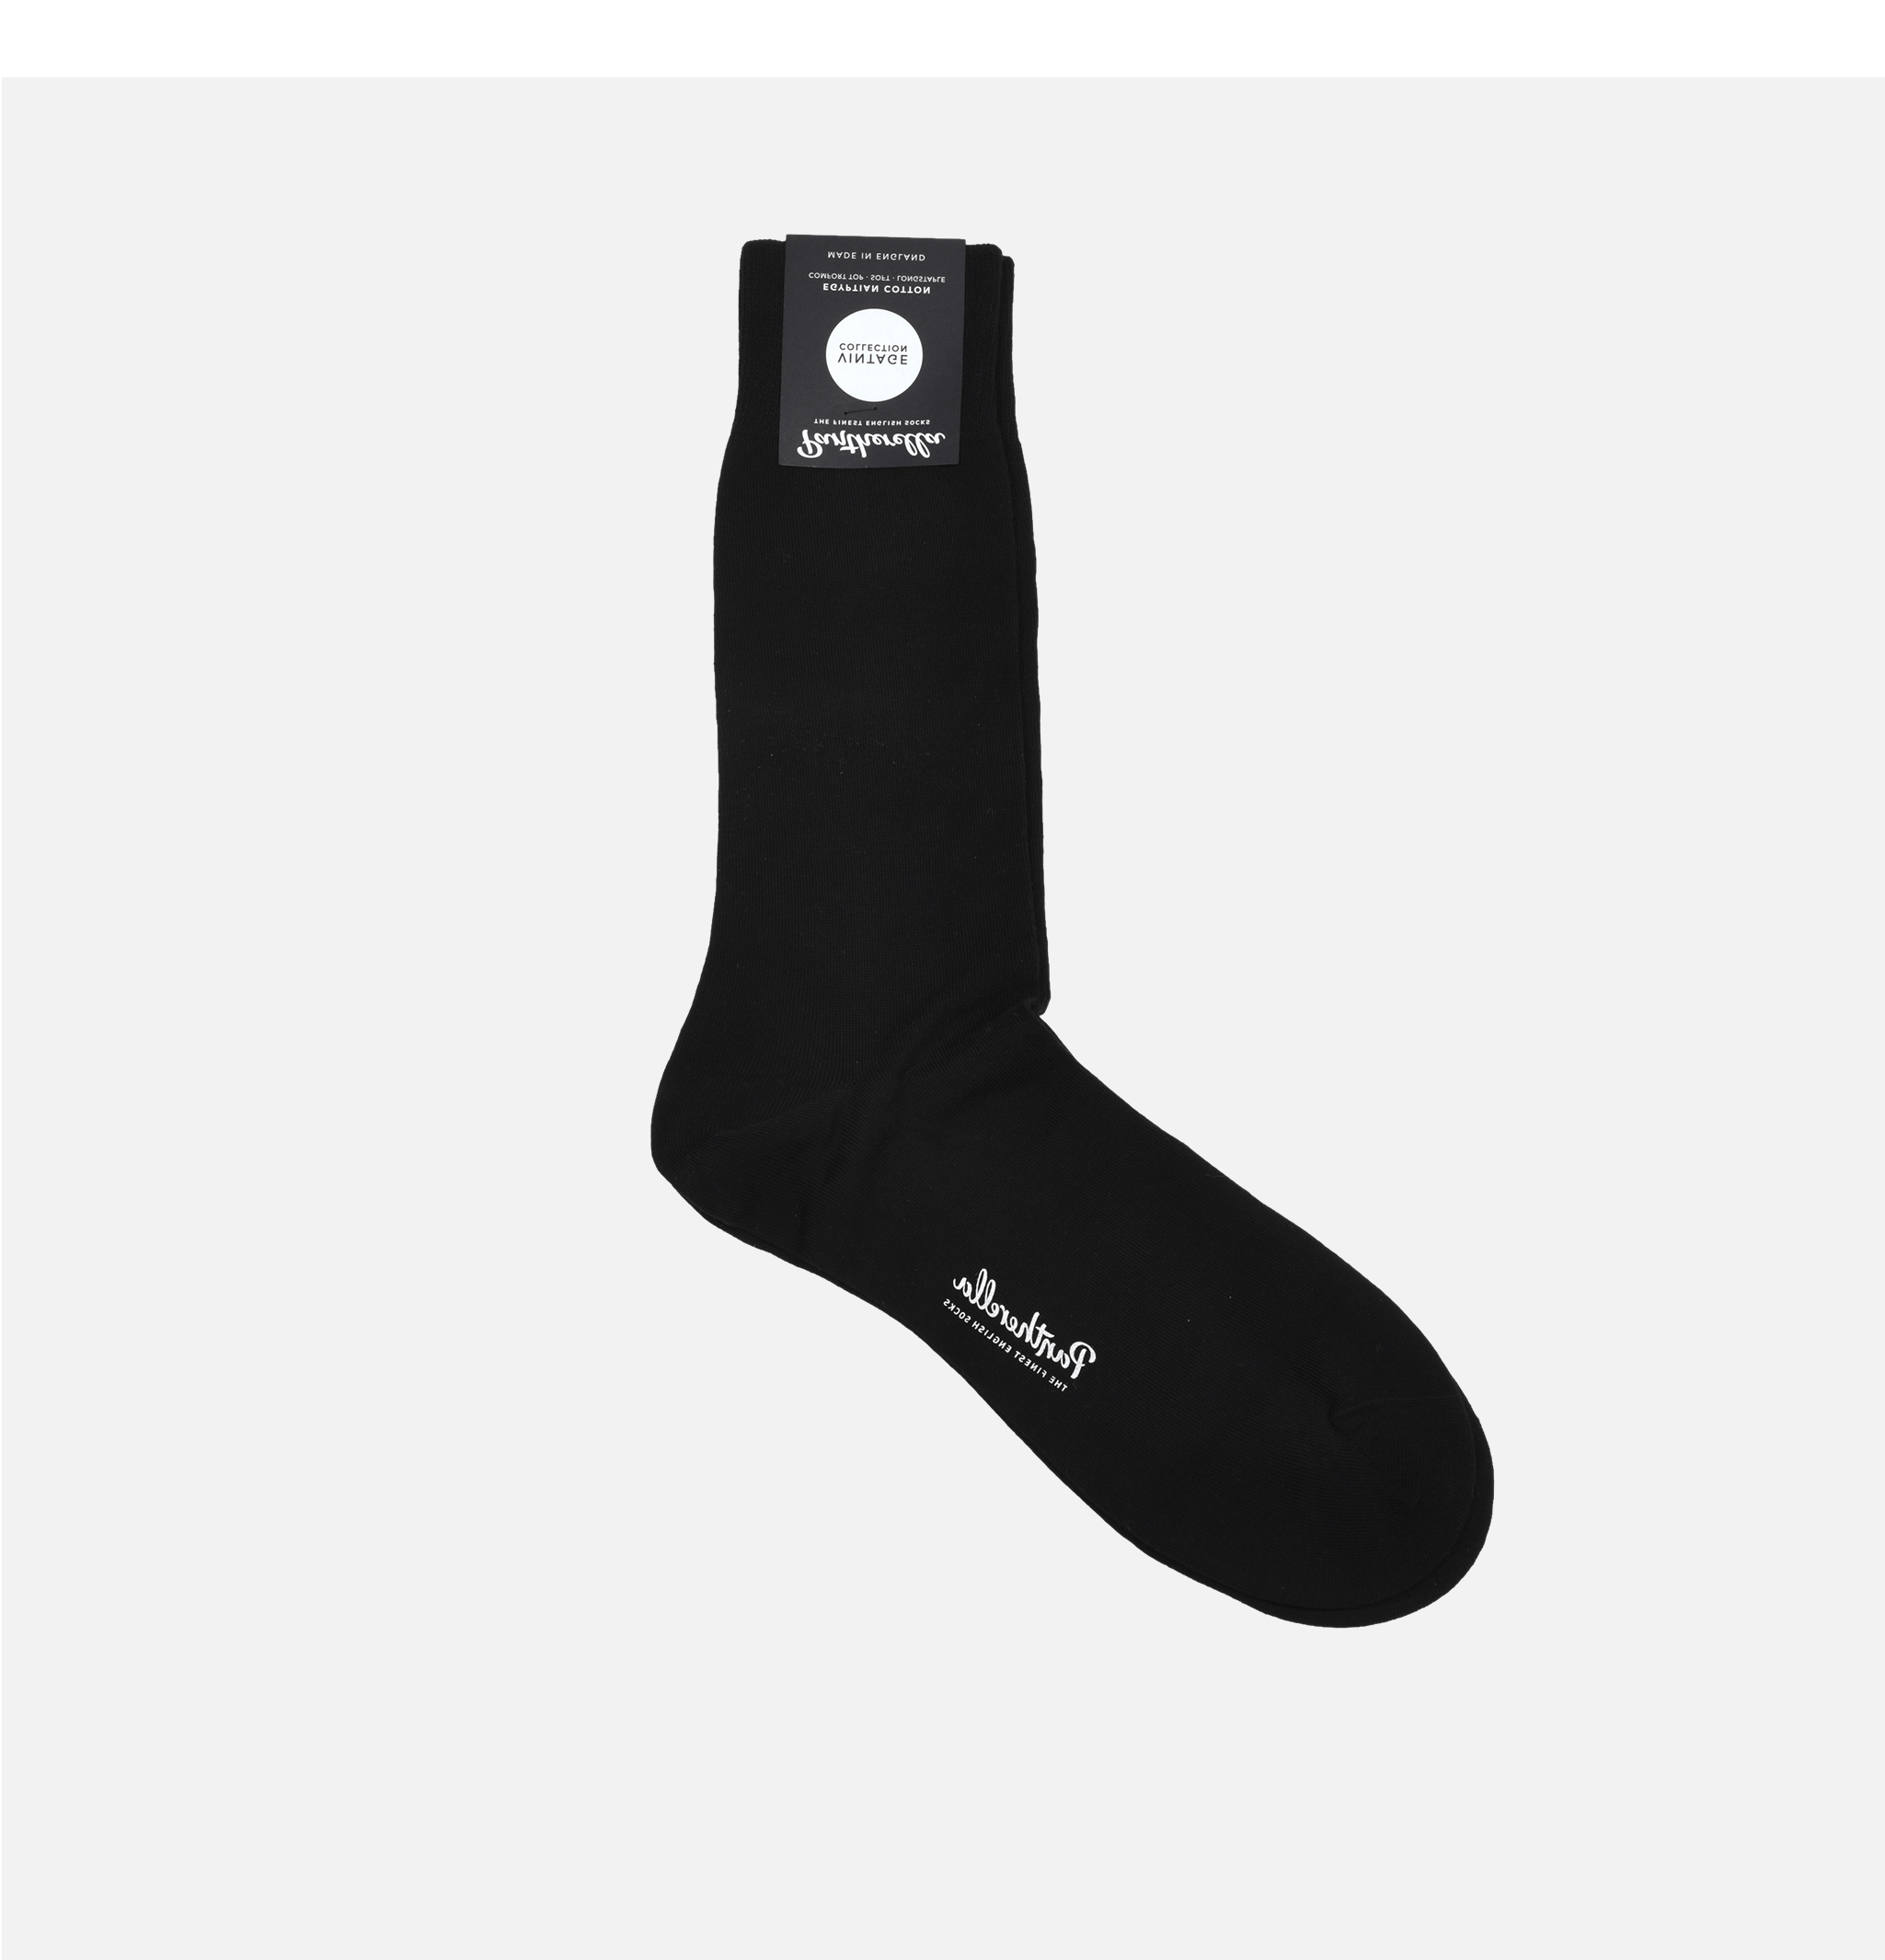 Pantherella Tavener Black socks